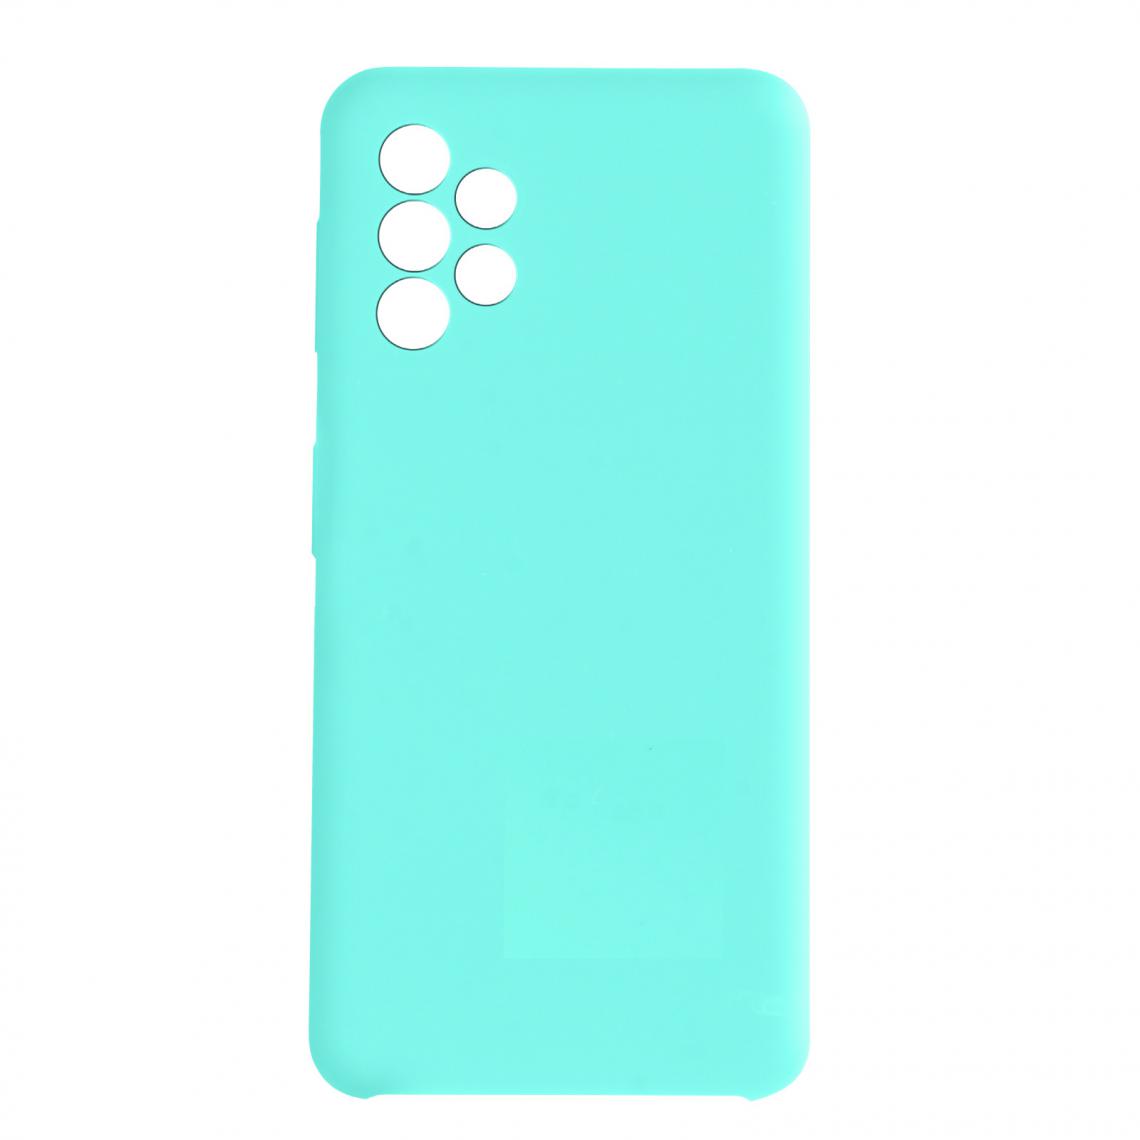 Avizar - Coque Samsung A72 Silicone Semi-rigide Soft-touch Collection Venus turquoise - Coque, étui smartphone